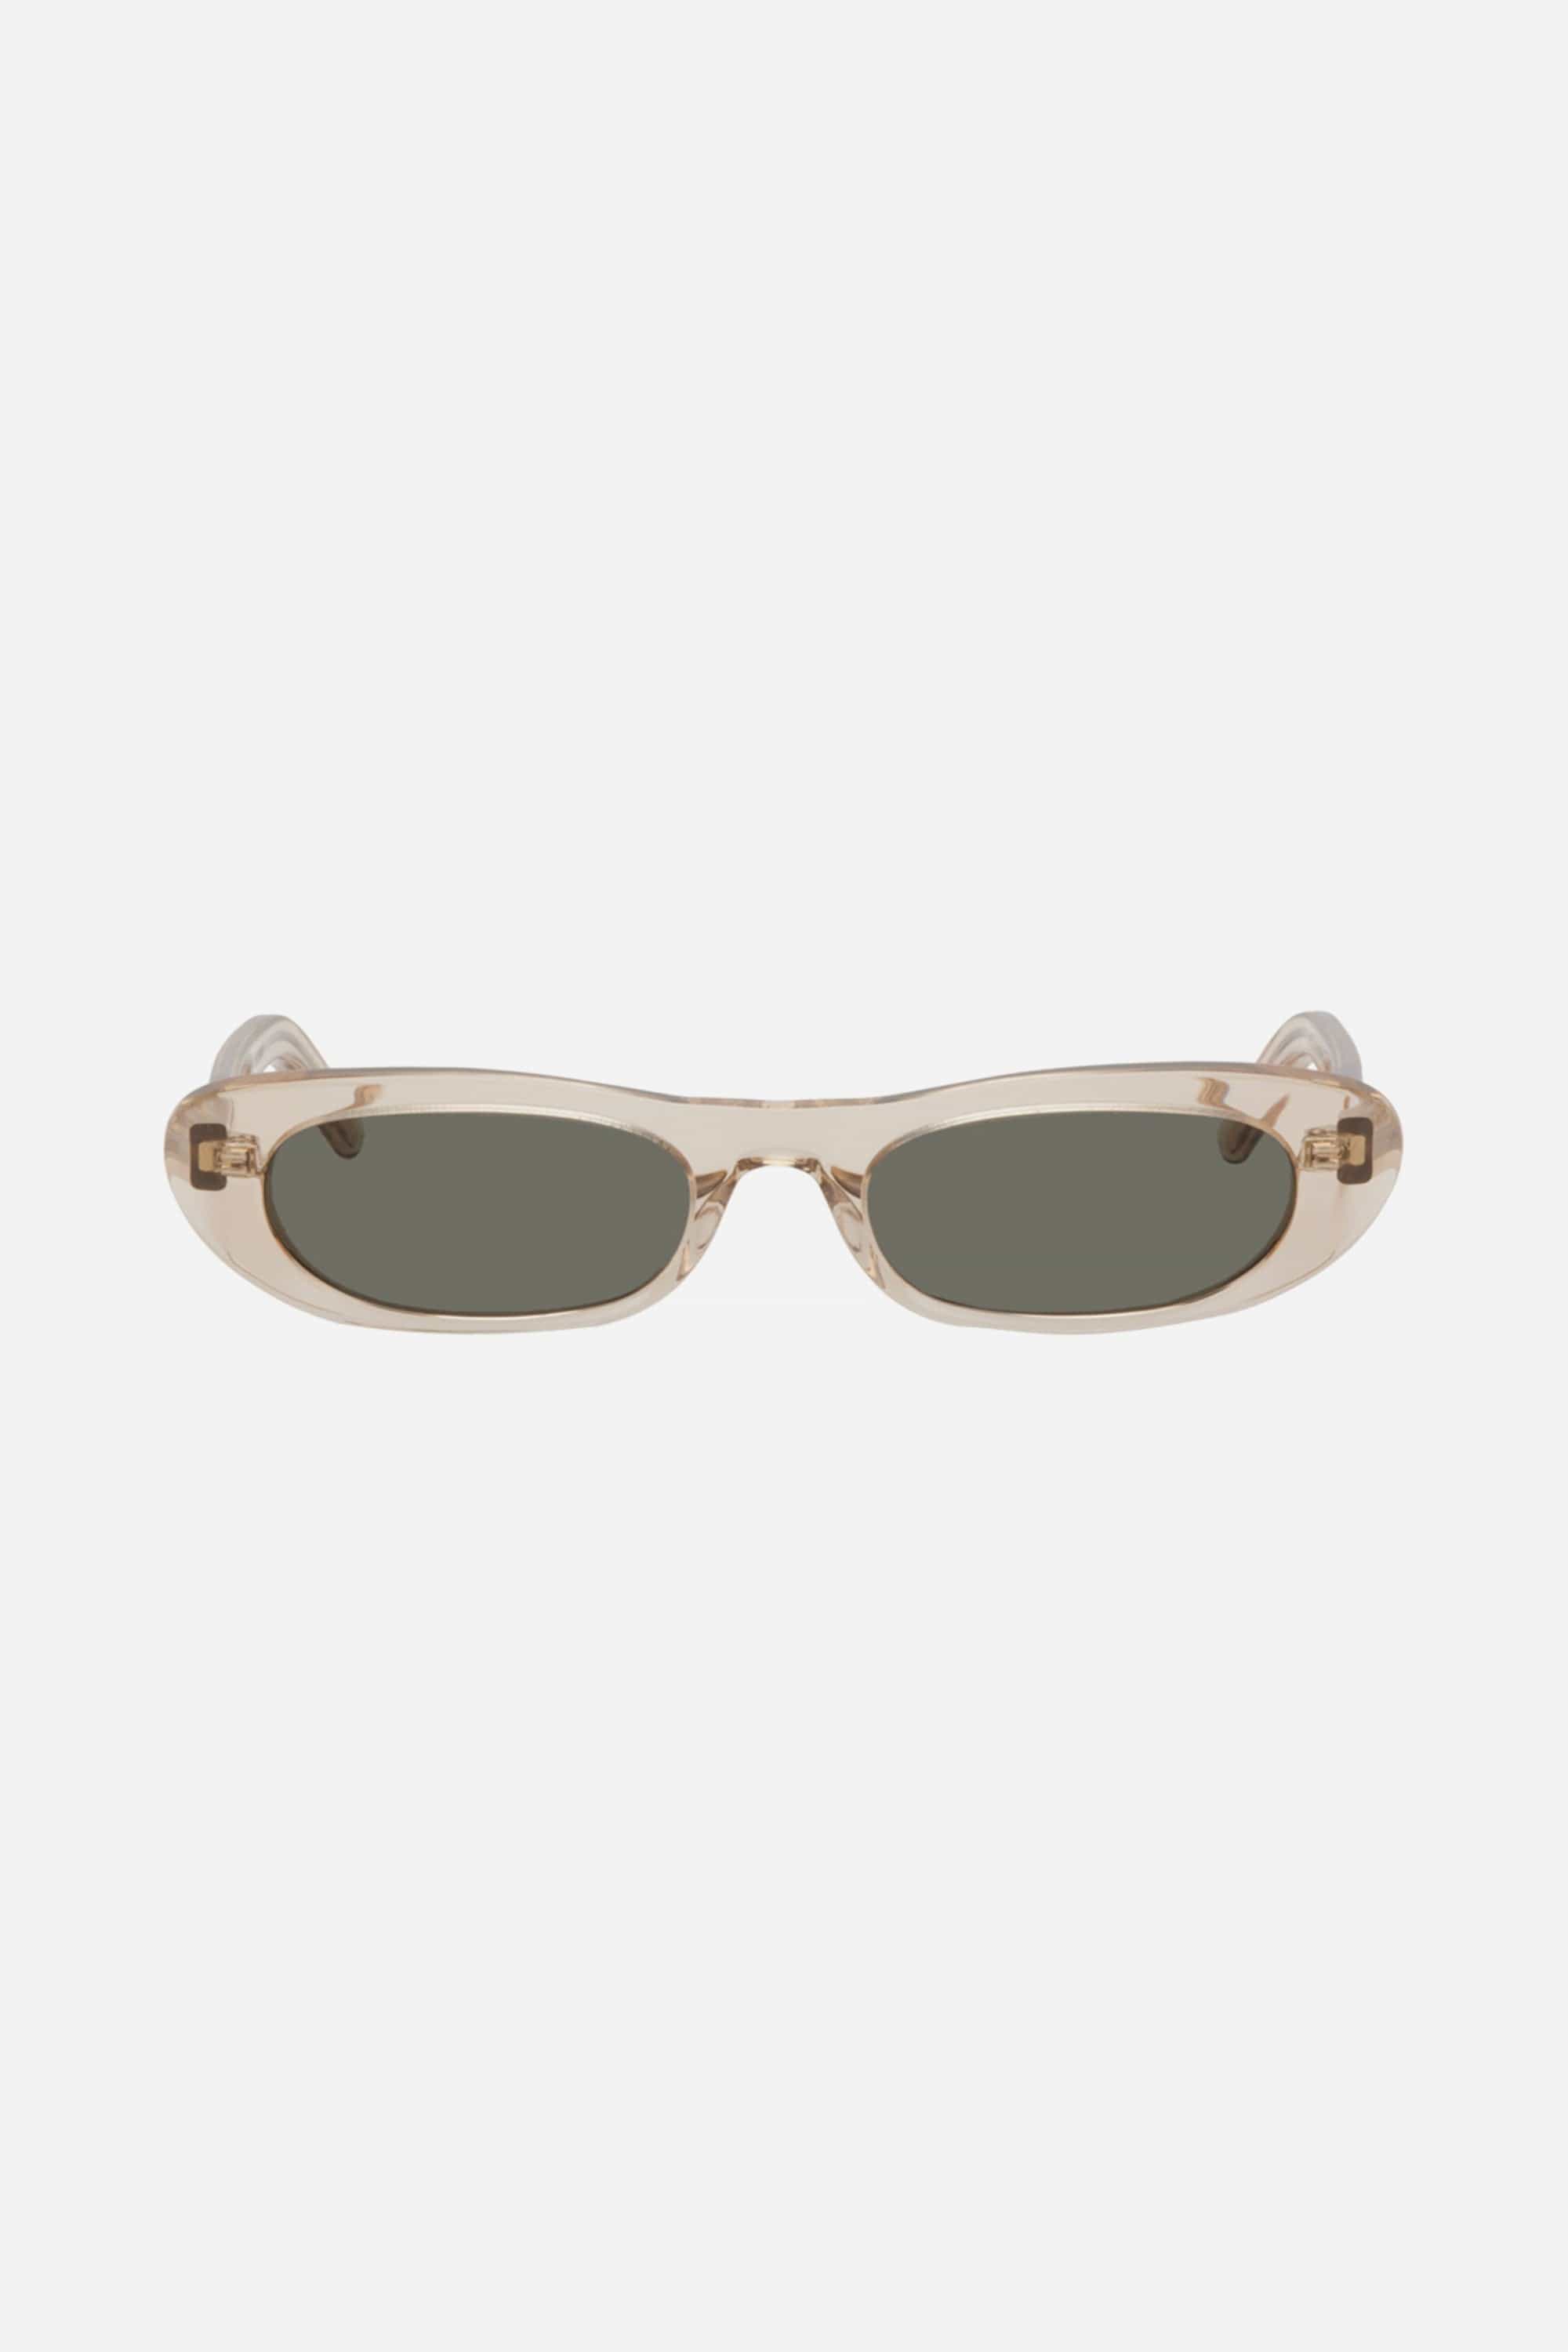 Saint Laurent SL 557 SHADE crystal sunglasses - Eyewear Club